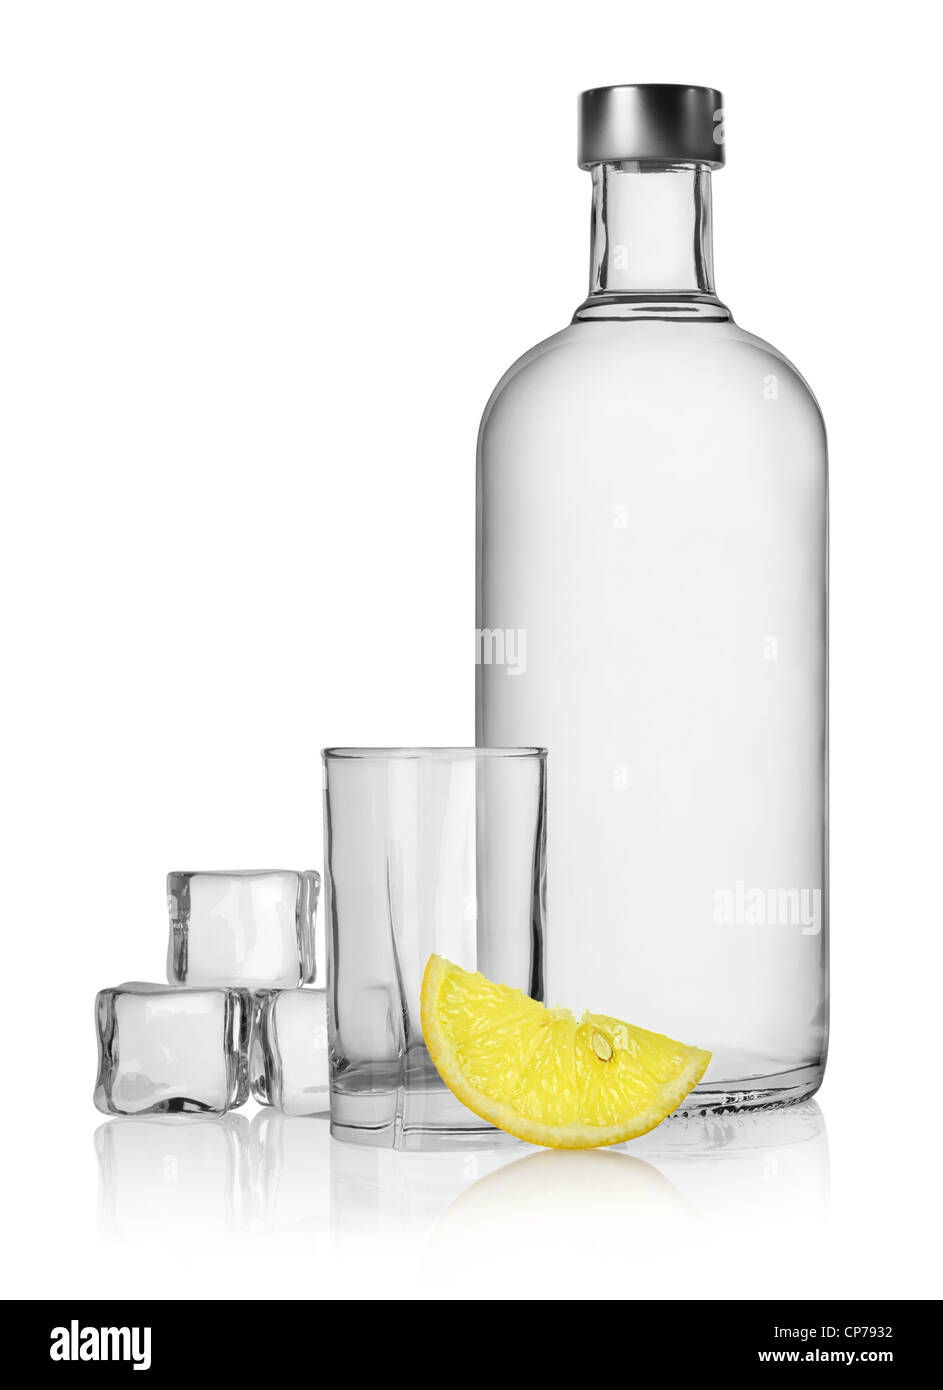 Bottle of vodka and lemon isolated on a white background Stock Photo